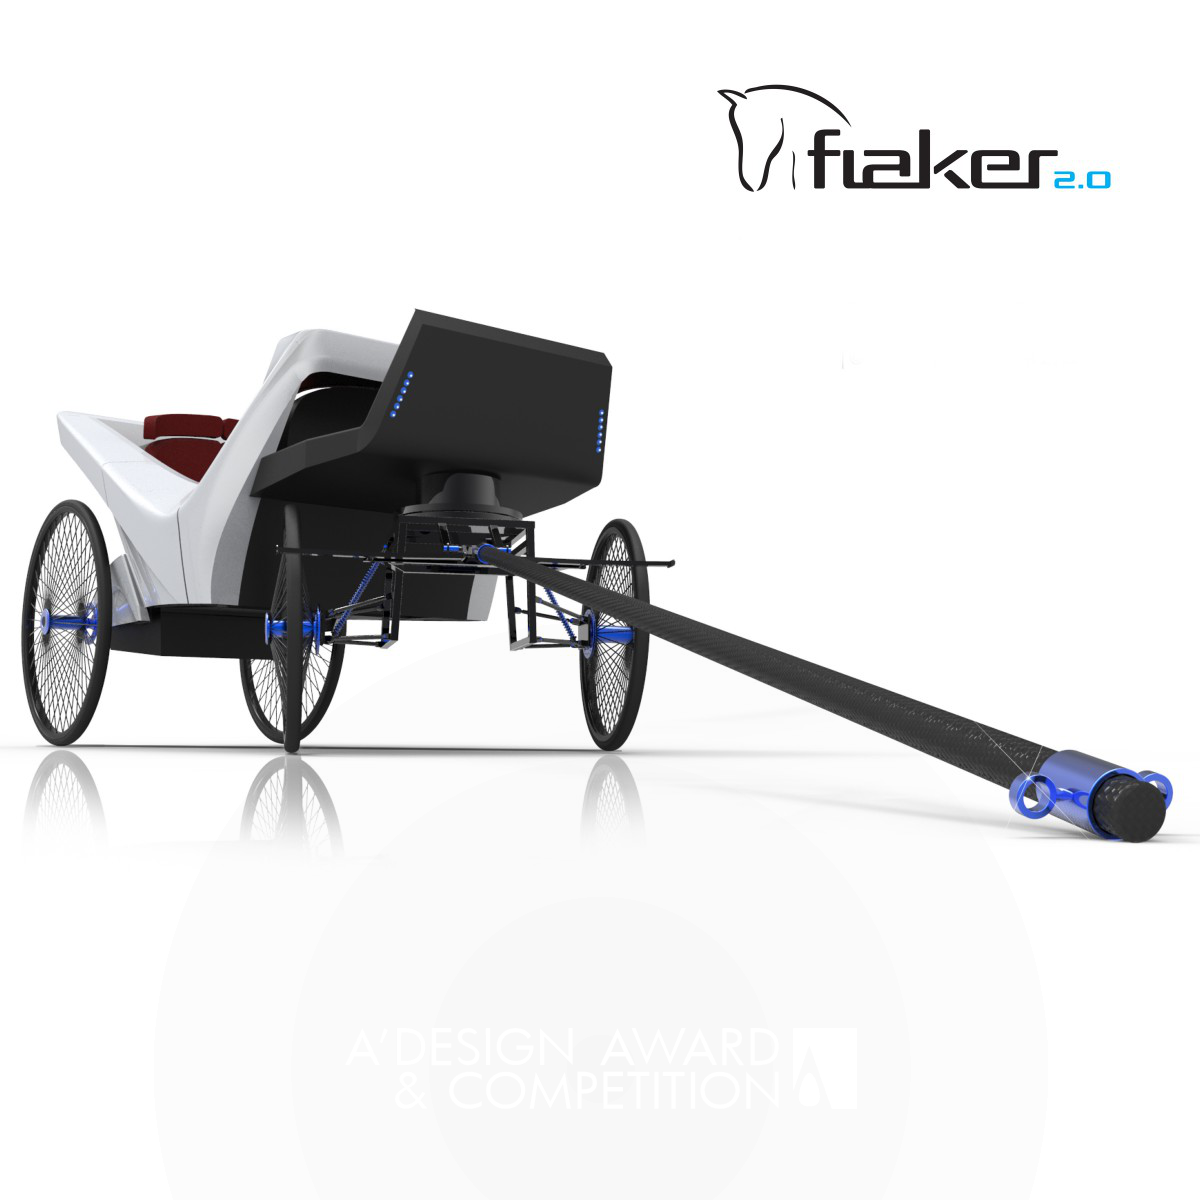 Fiaker 2.0 <b>advanced carriage